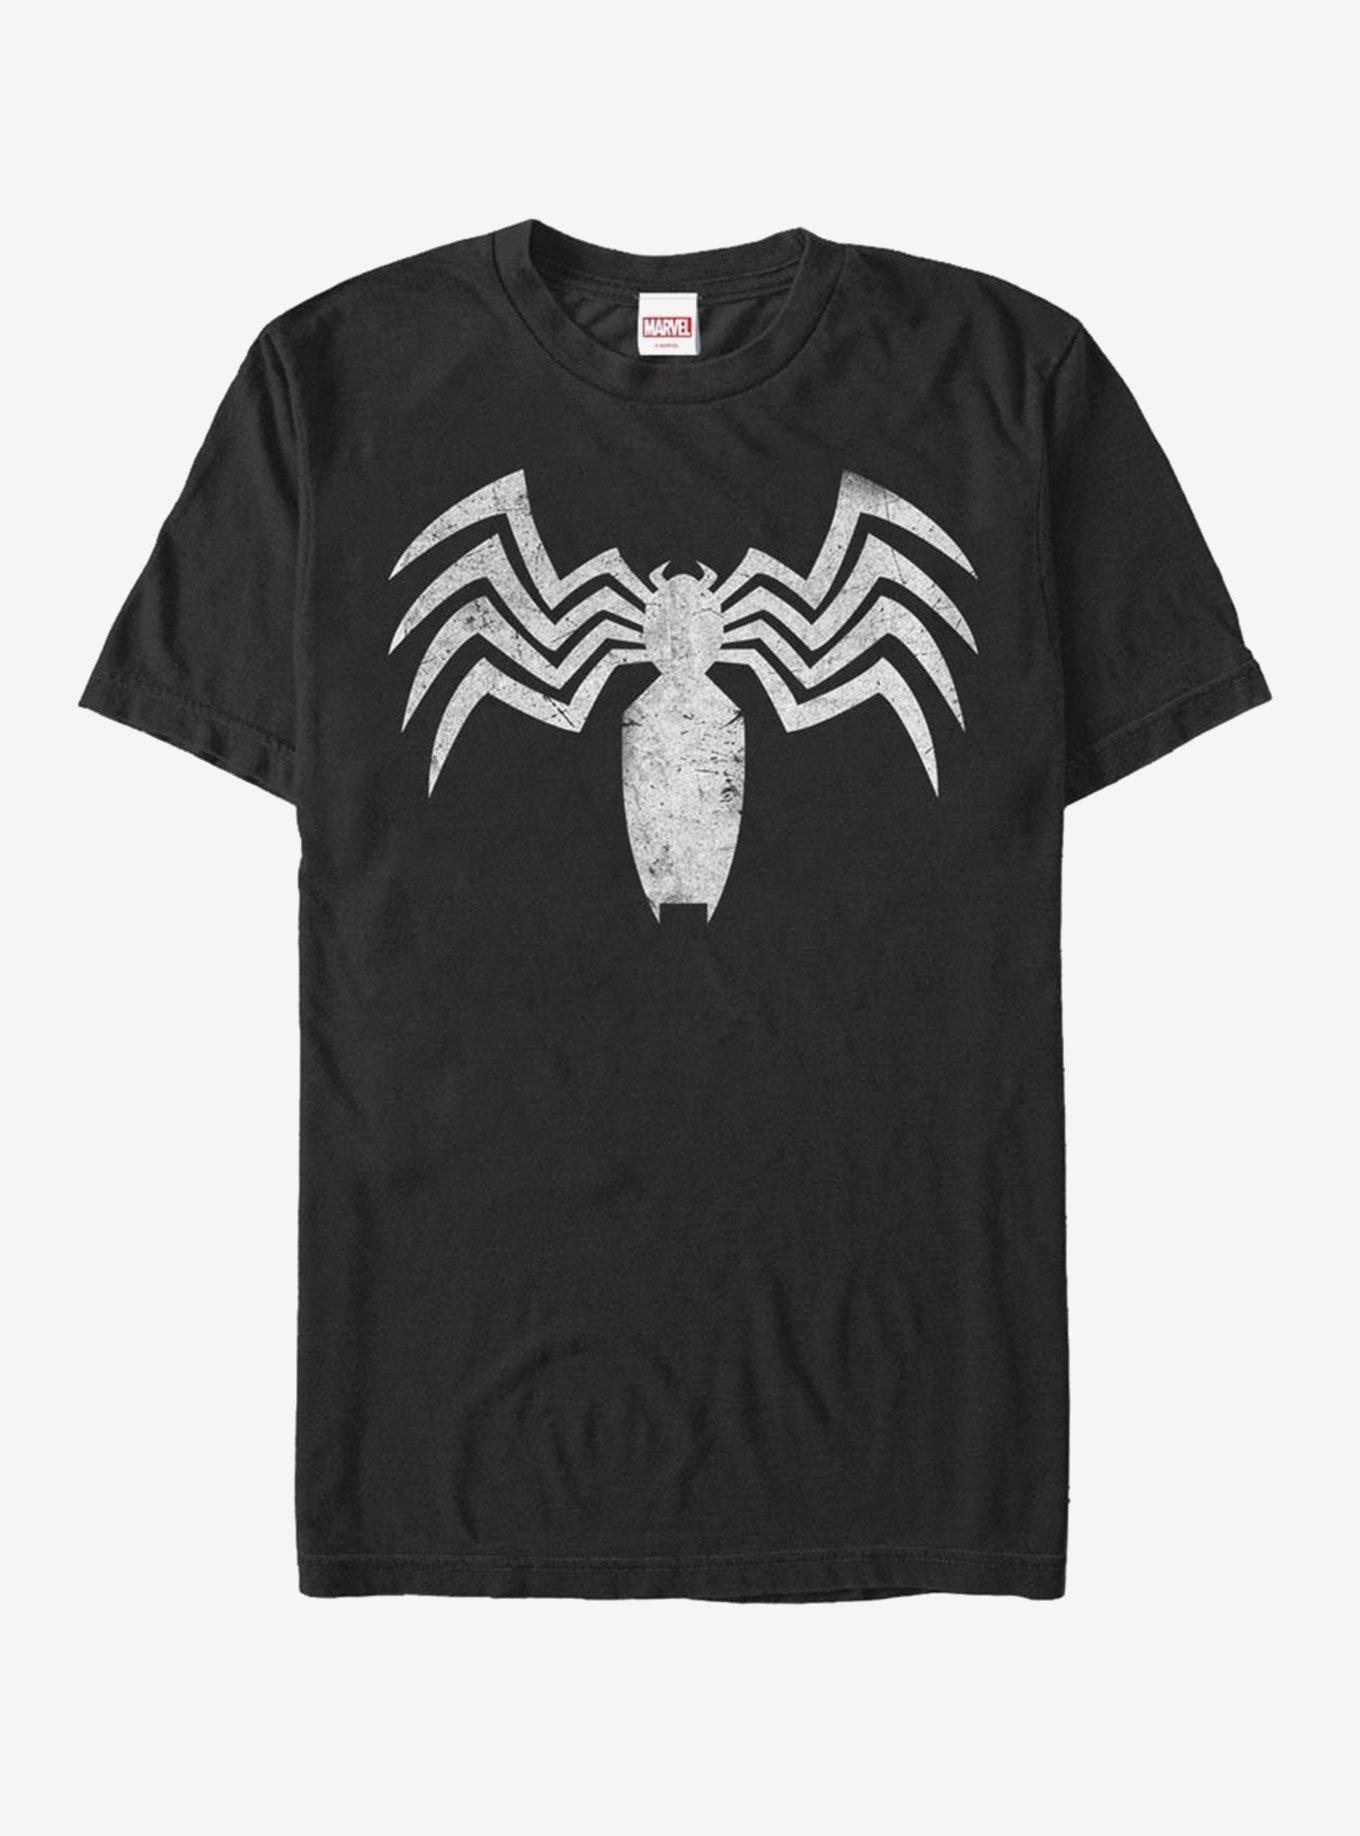 Marvel Venom Distressed Claw Logo T-Shirt, , hi-res